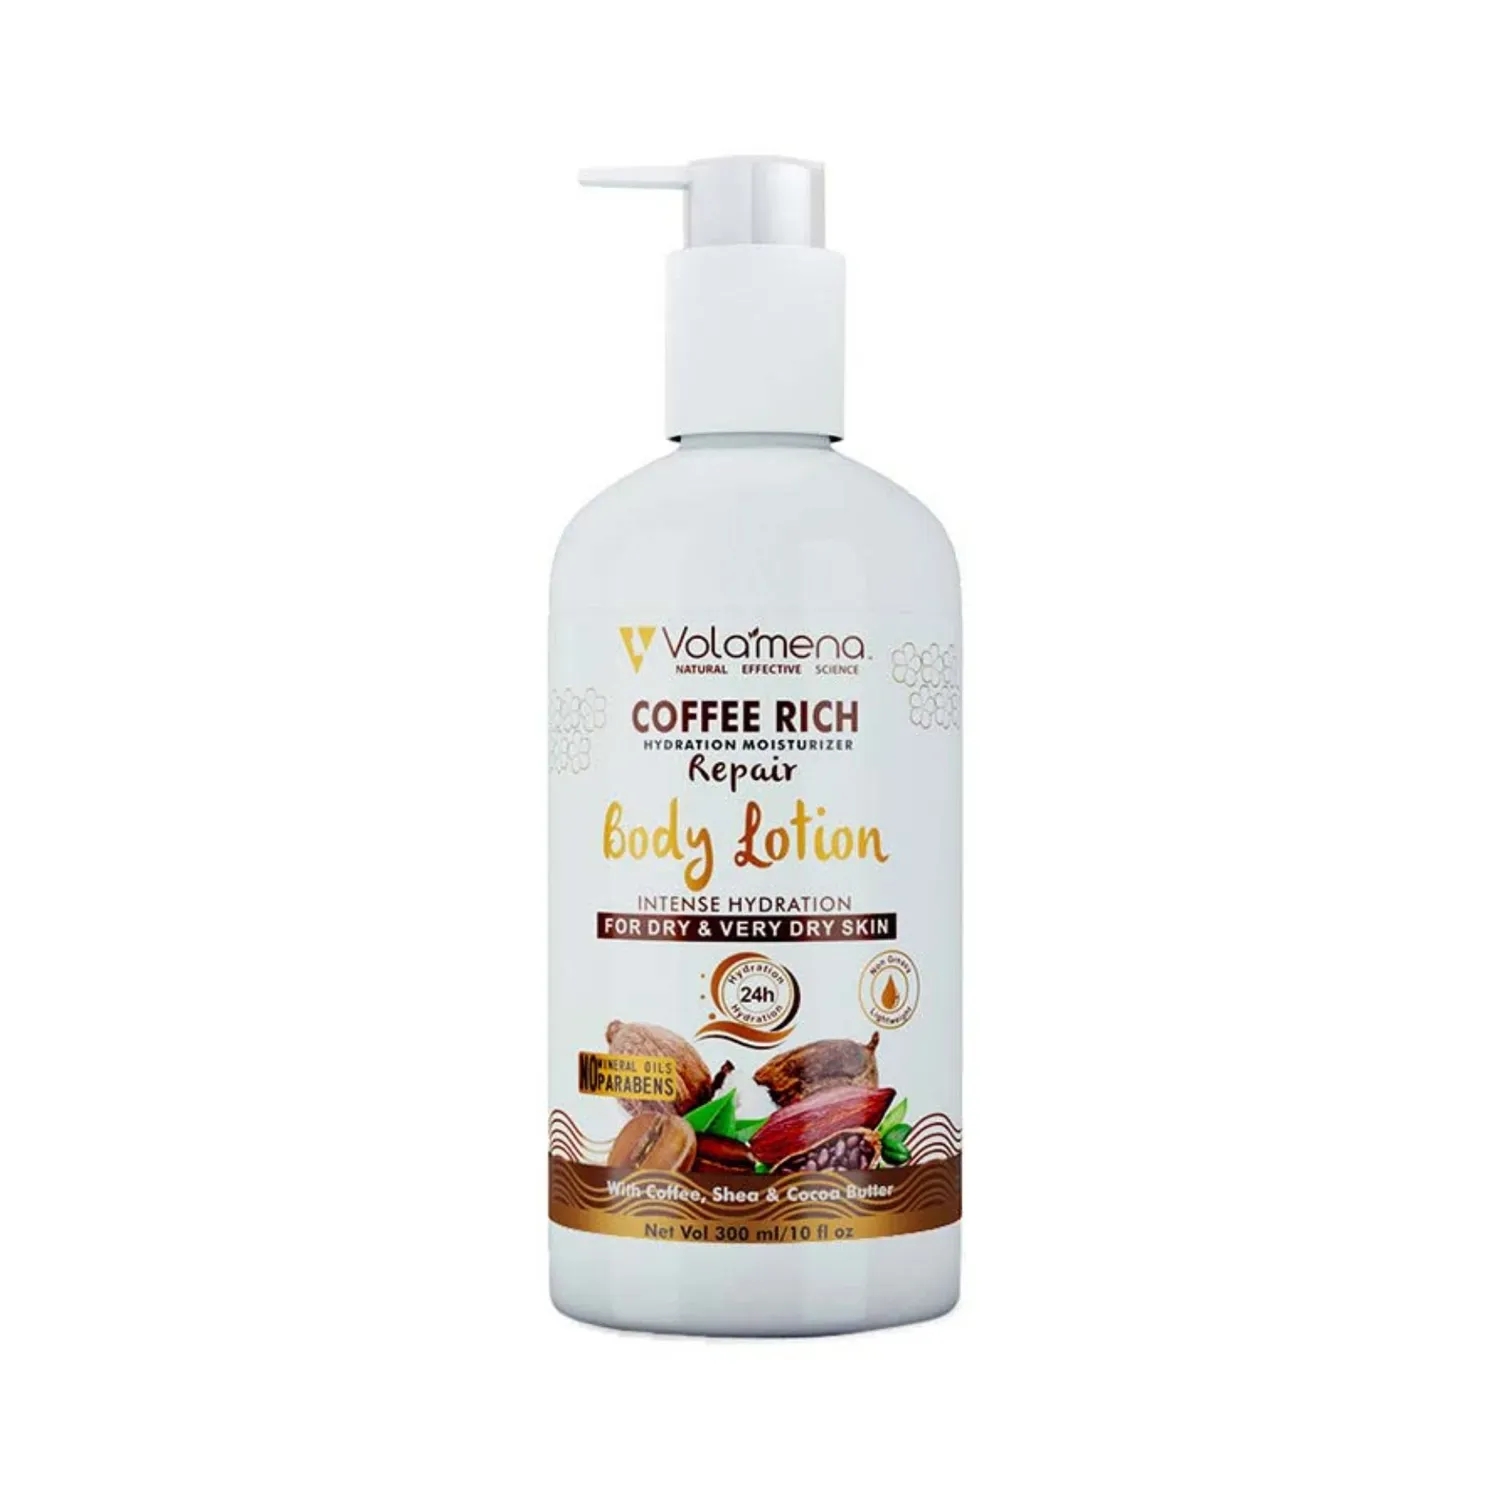 Volamena Coffee Rich Hydration Moisturizer Repair Body Lotion (300ml)